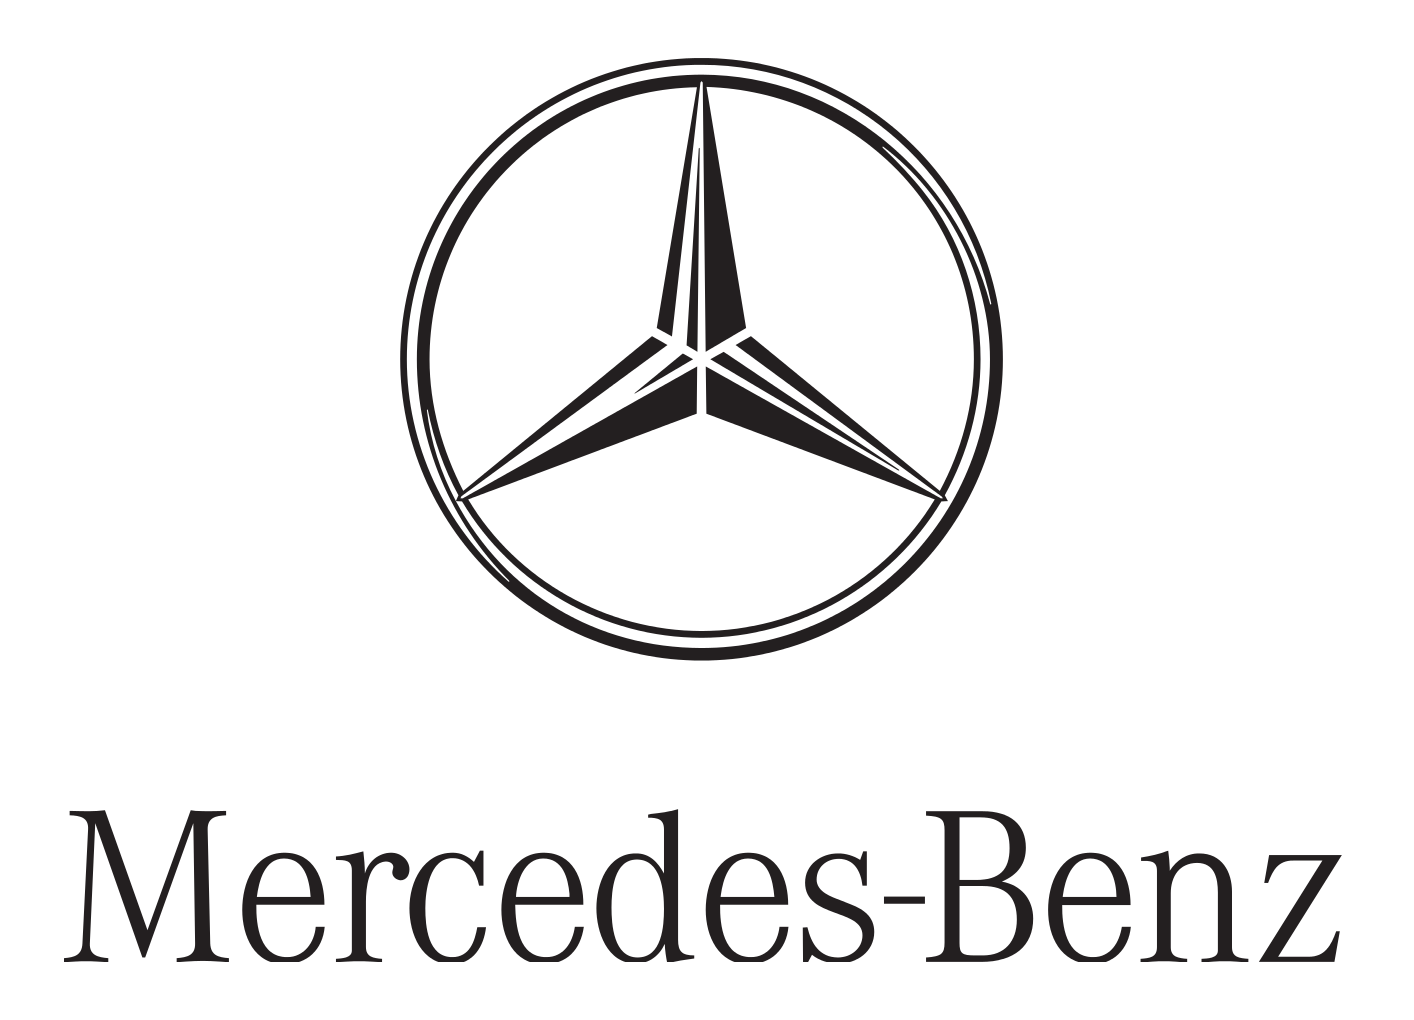 Mercedes-Benz-logo-2008-1920x1080-1.png